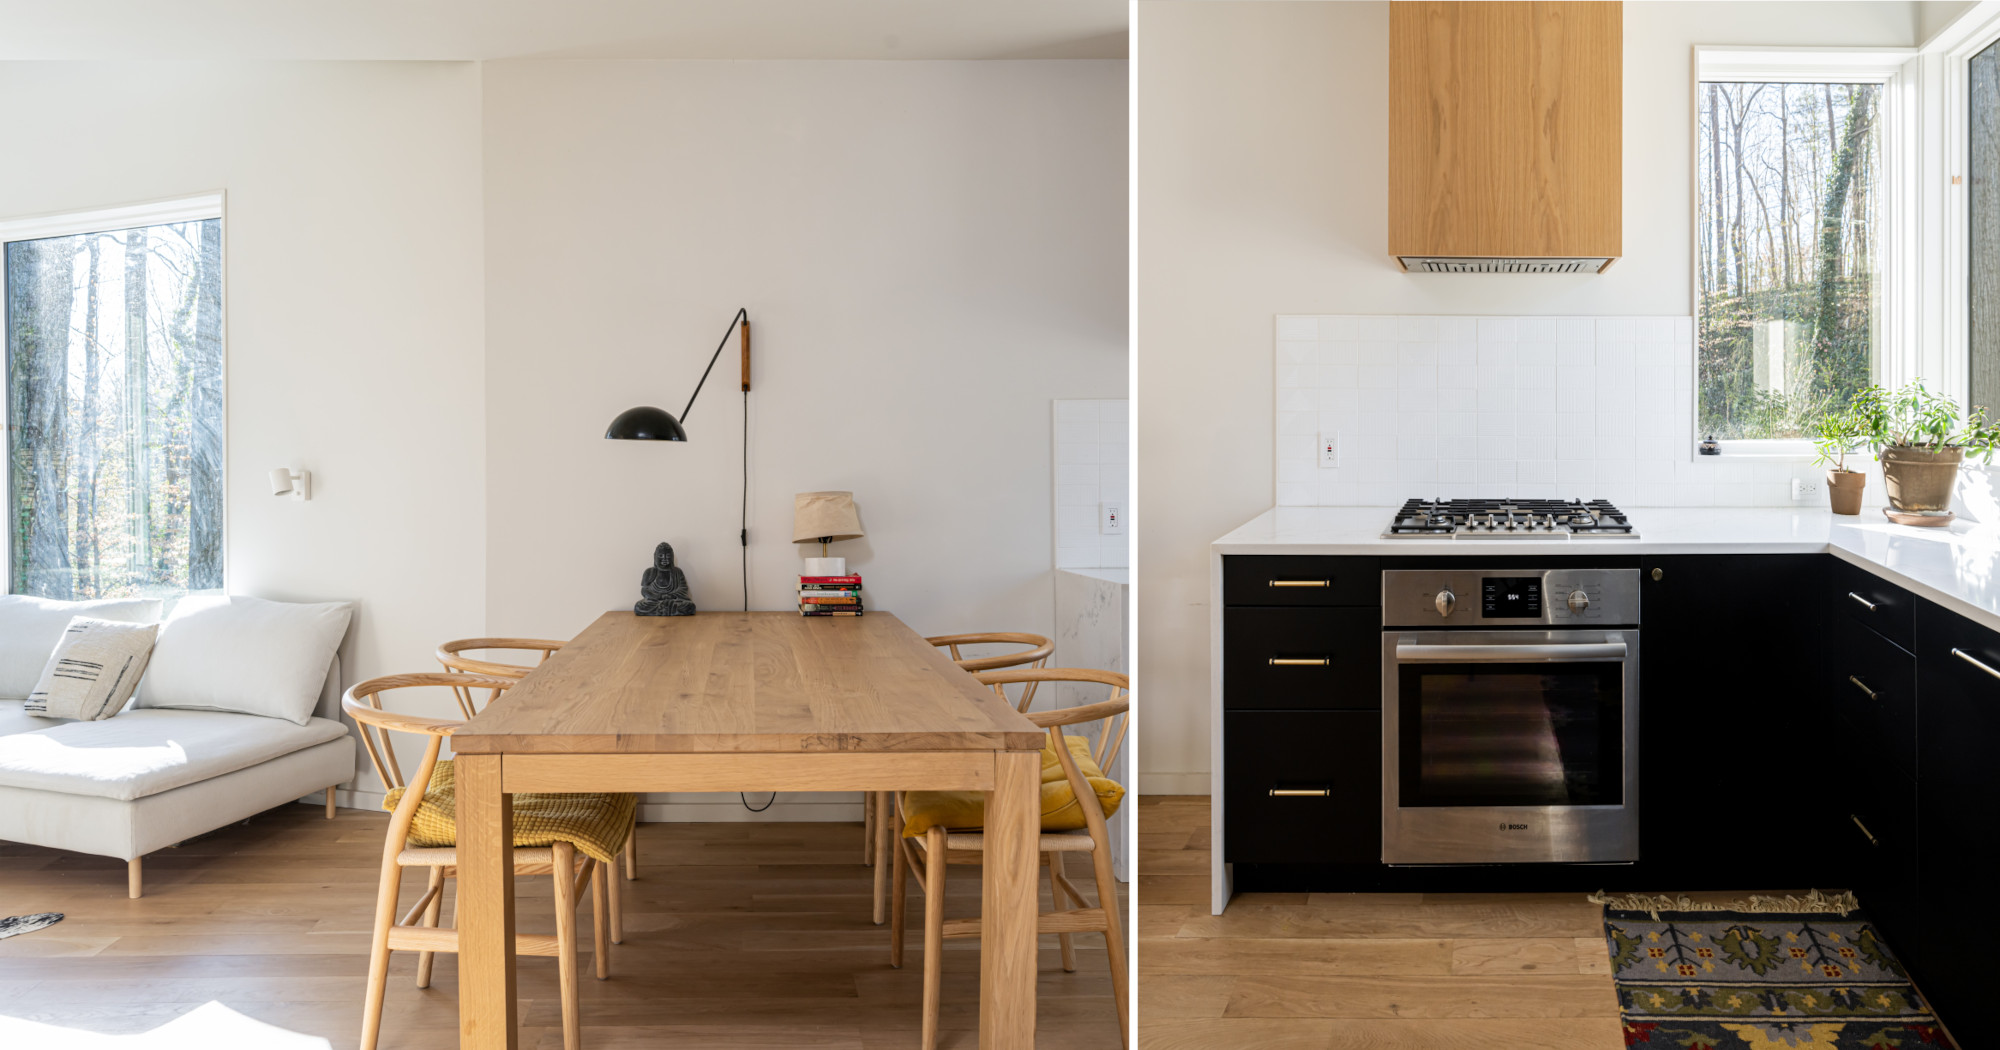 asheville-architects-casa-negra-kitchen